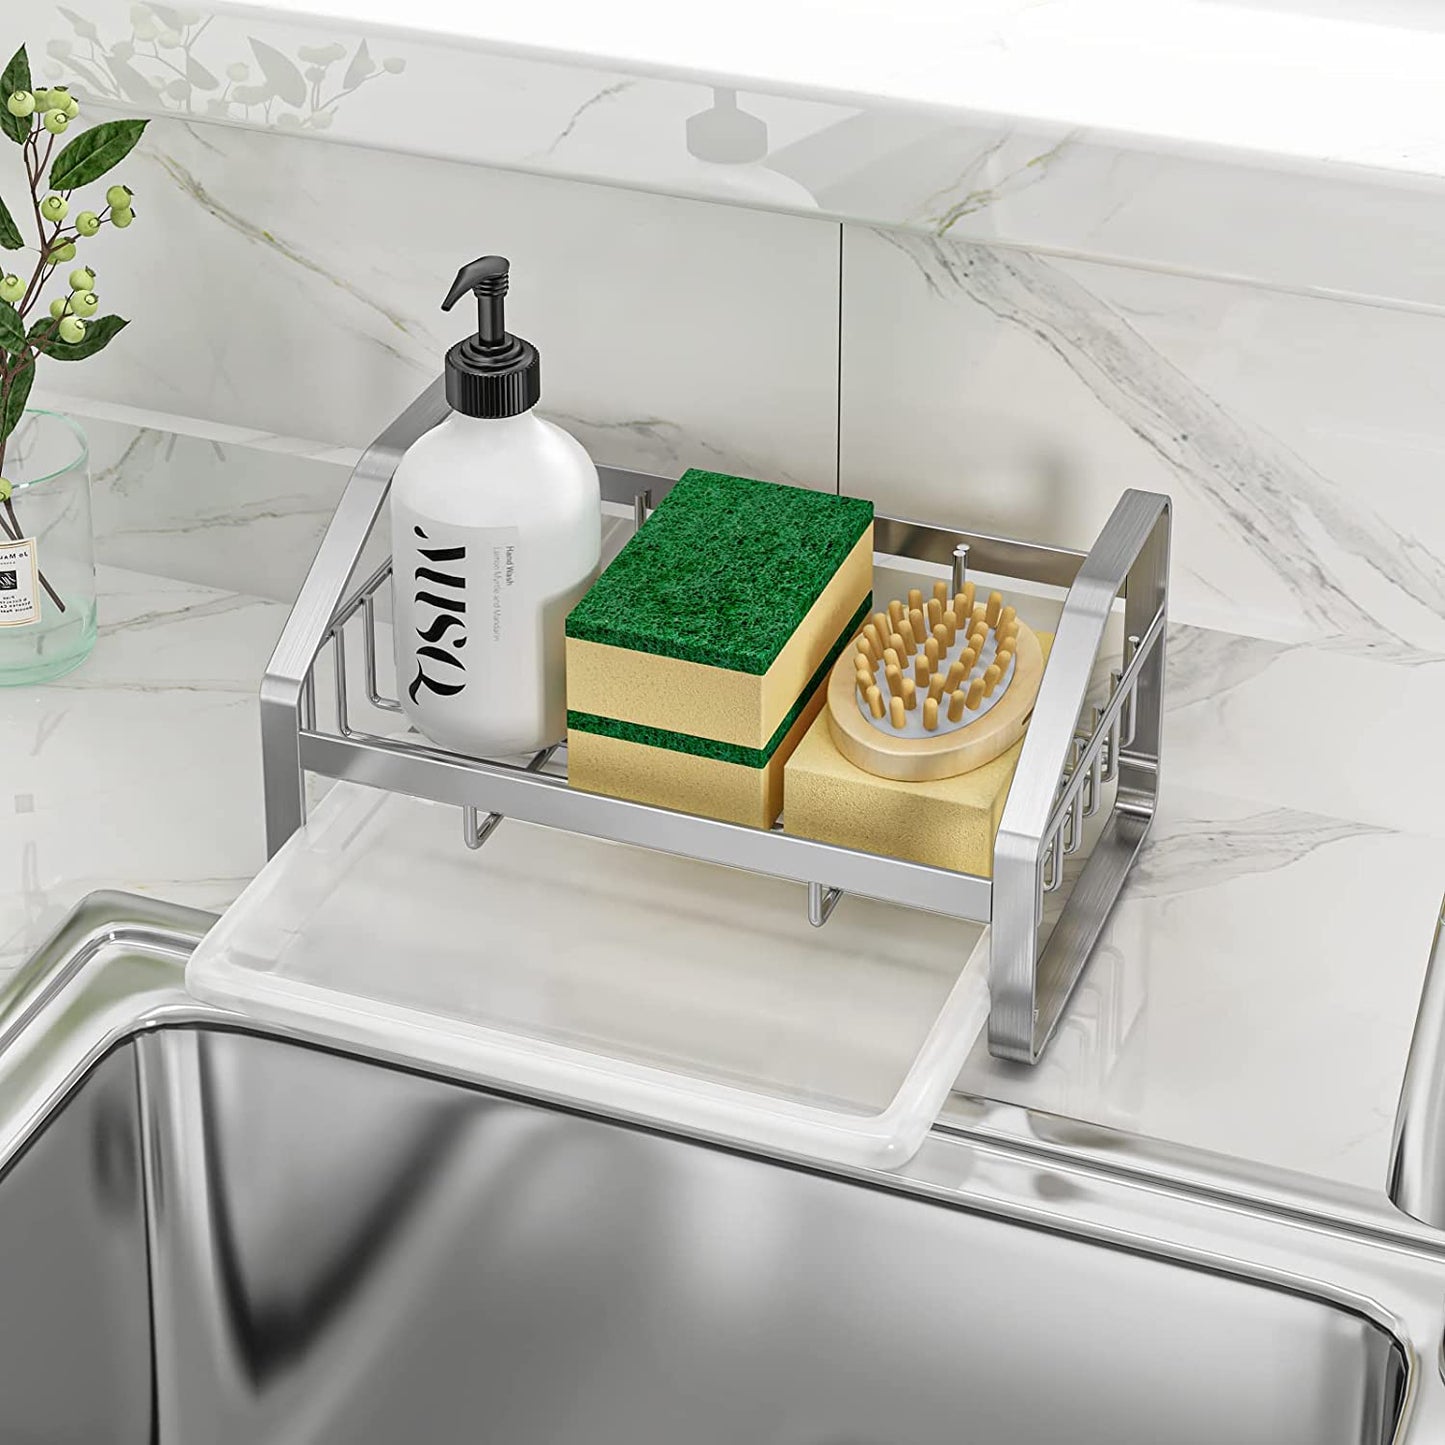 Sink Caddy, Sponge Holder for Kitchen Sink, Kitchen Bathroom Sink Organizer, 304 Stainless Steel Kitchen Countertop Organizer Soap Tray with Removable Drain Tray-Silver